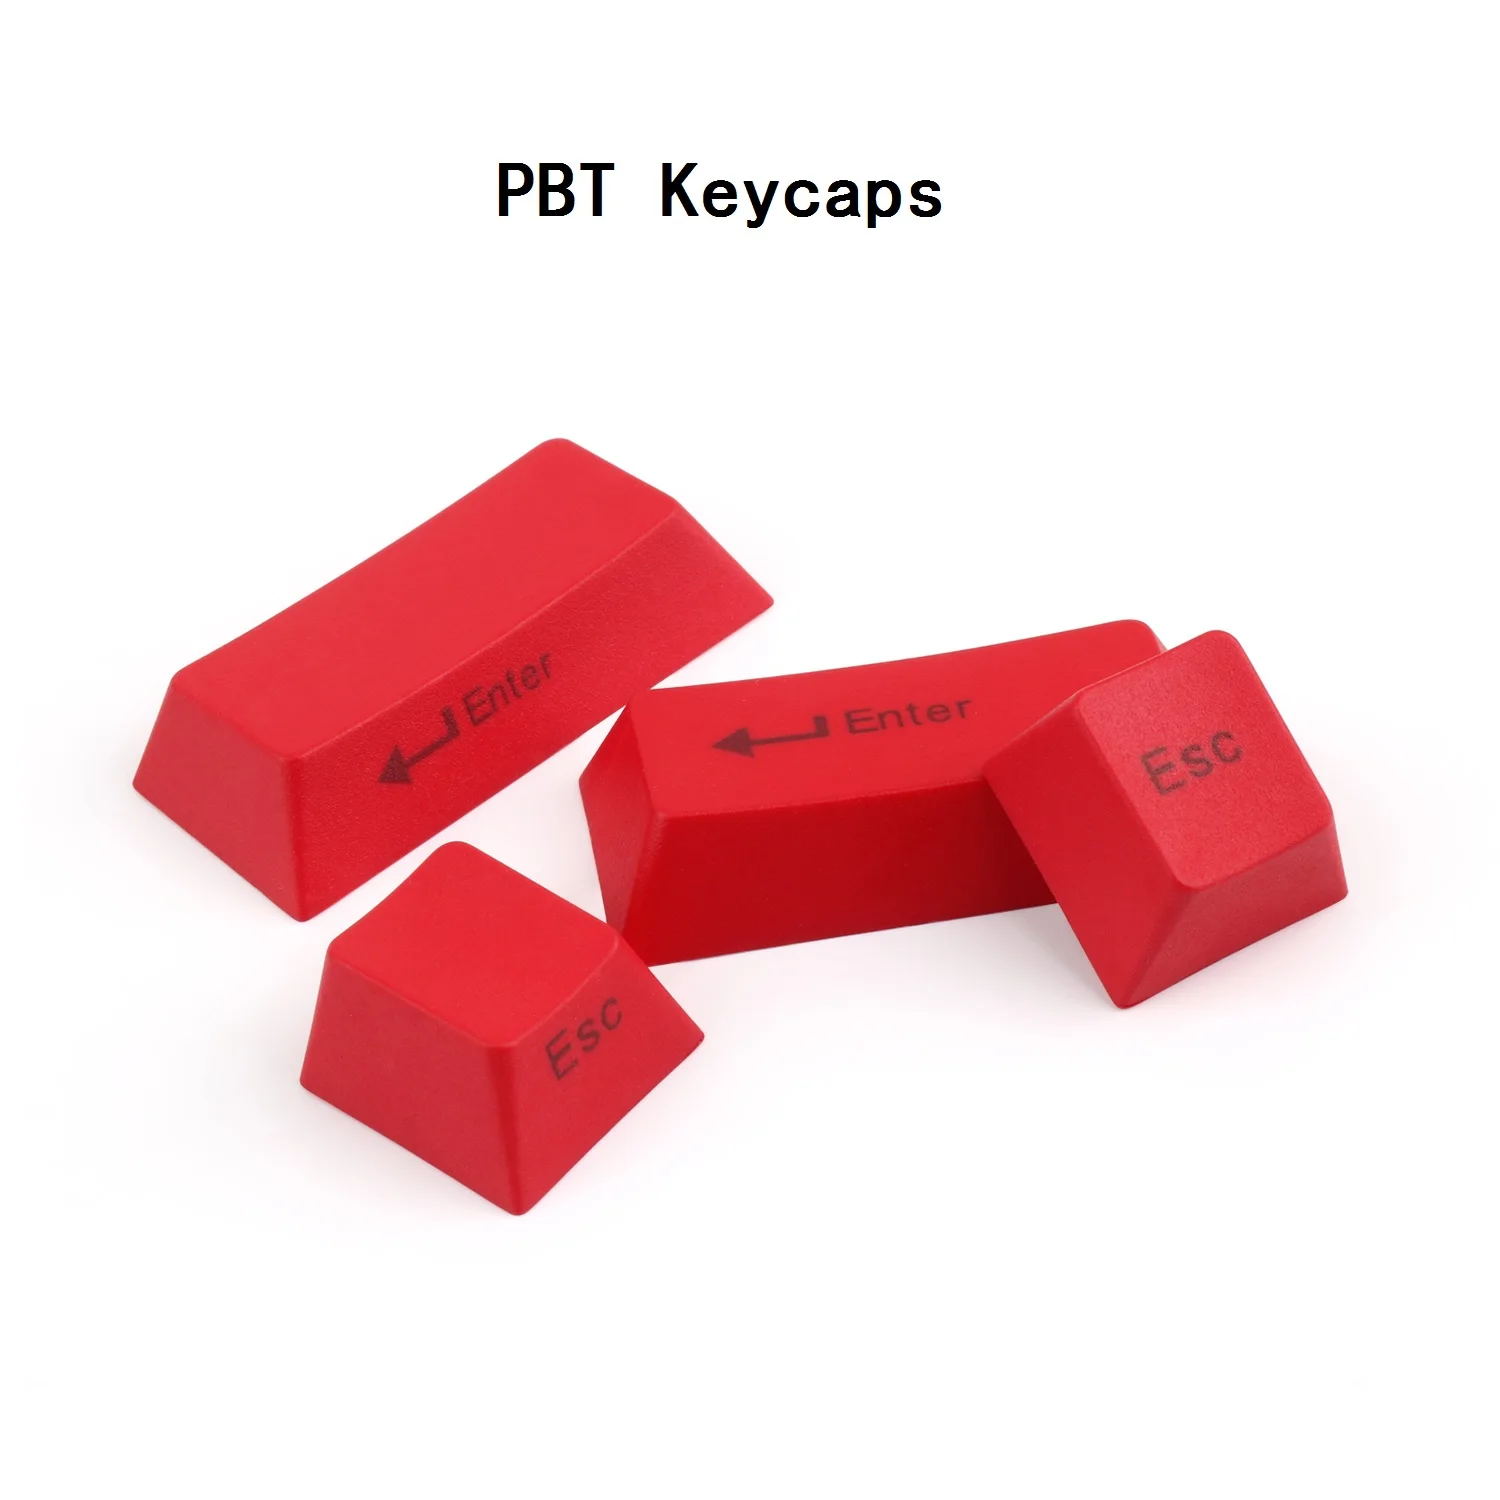 Custom Pbt Esc Enter Yellow Red Klawiszy Cherry OEM Profile Thermal Sublimation Keycap For Diy Gaming Mechanical Keyboard GK61 64